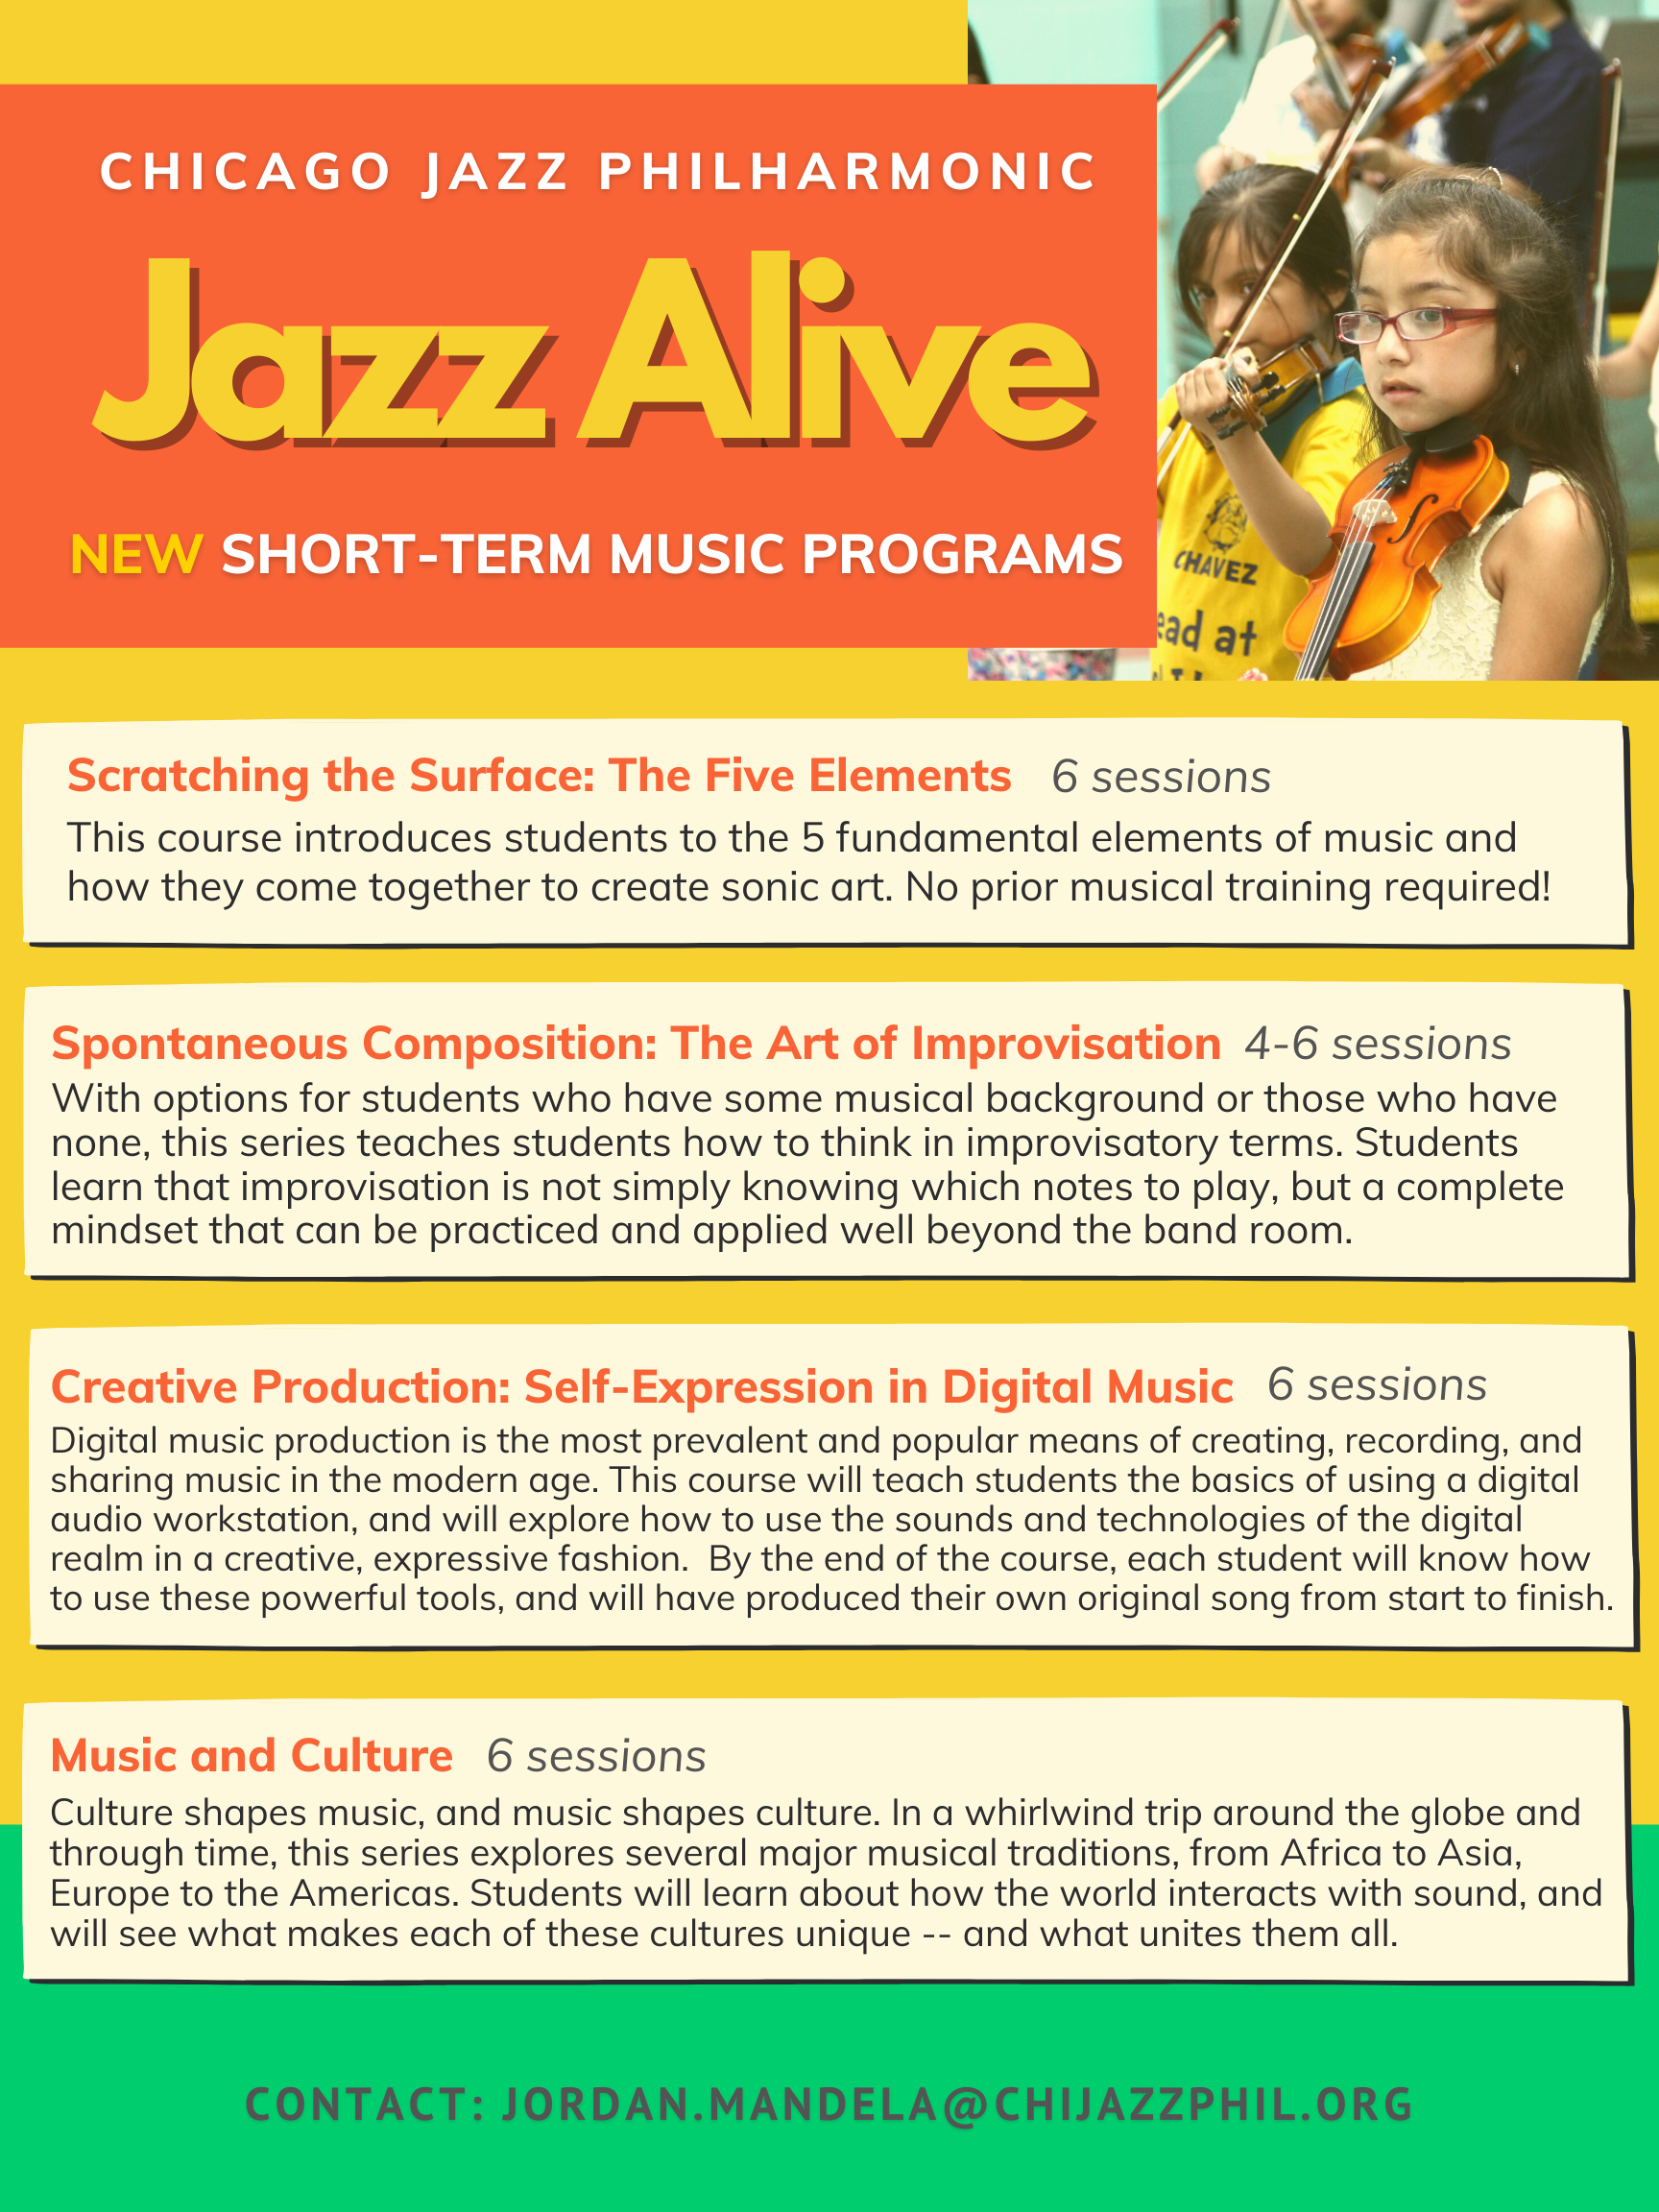 NEW Jazz Alive Short-Term Music Programs